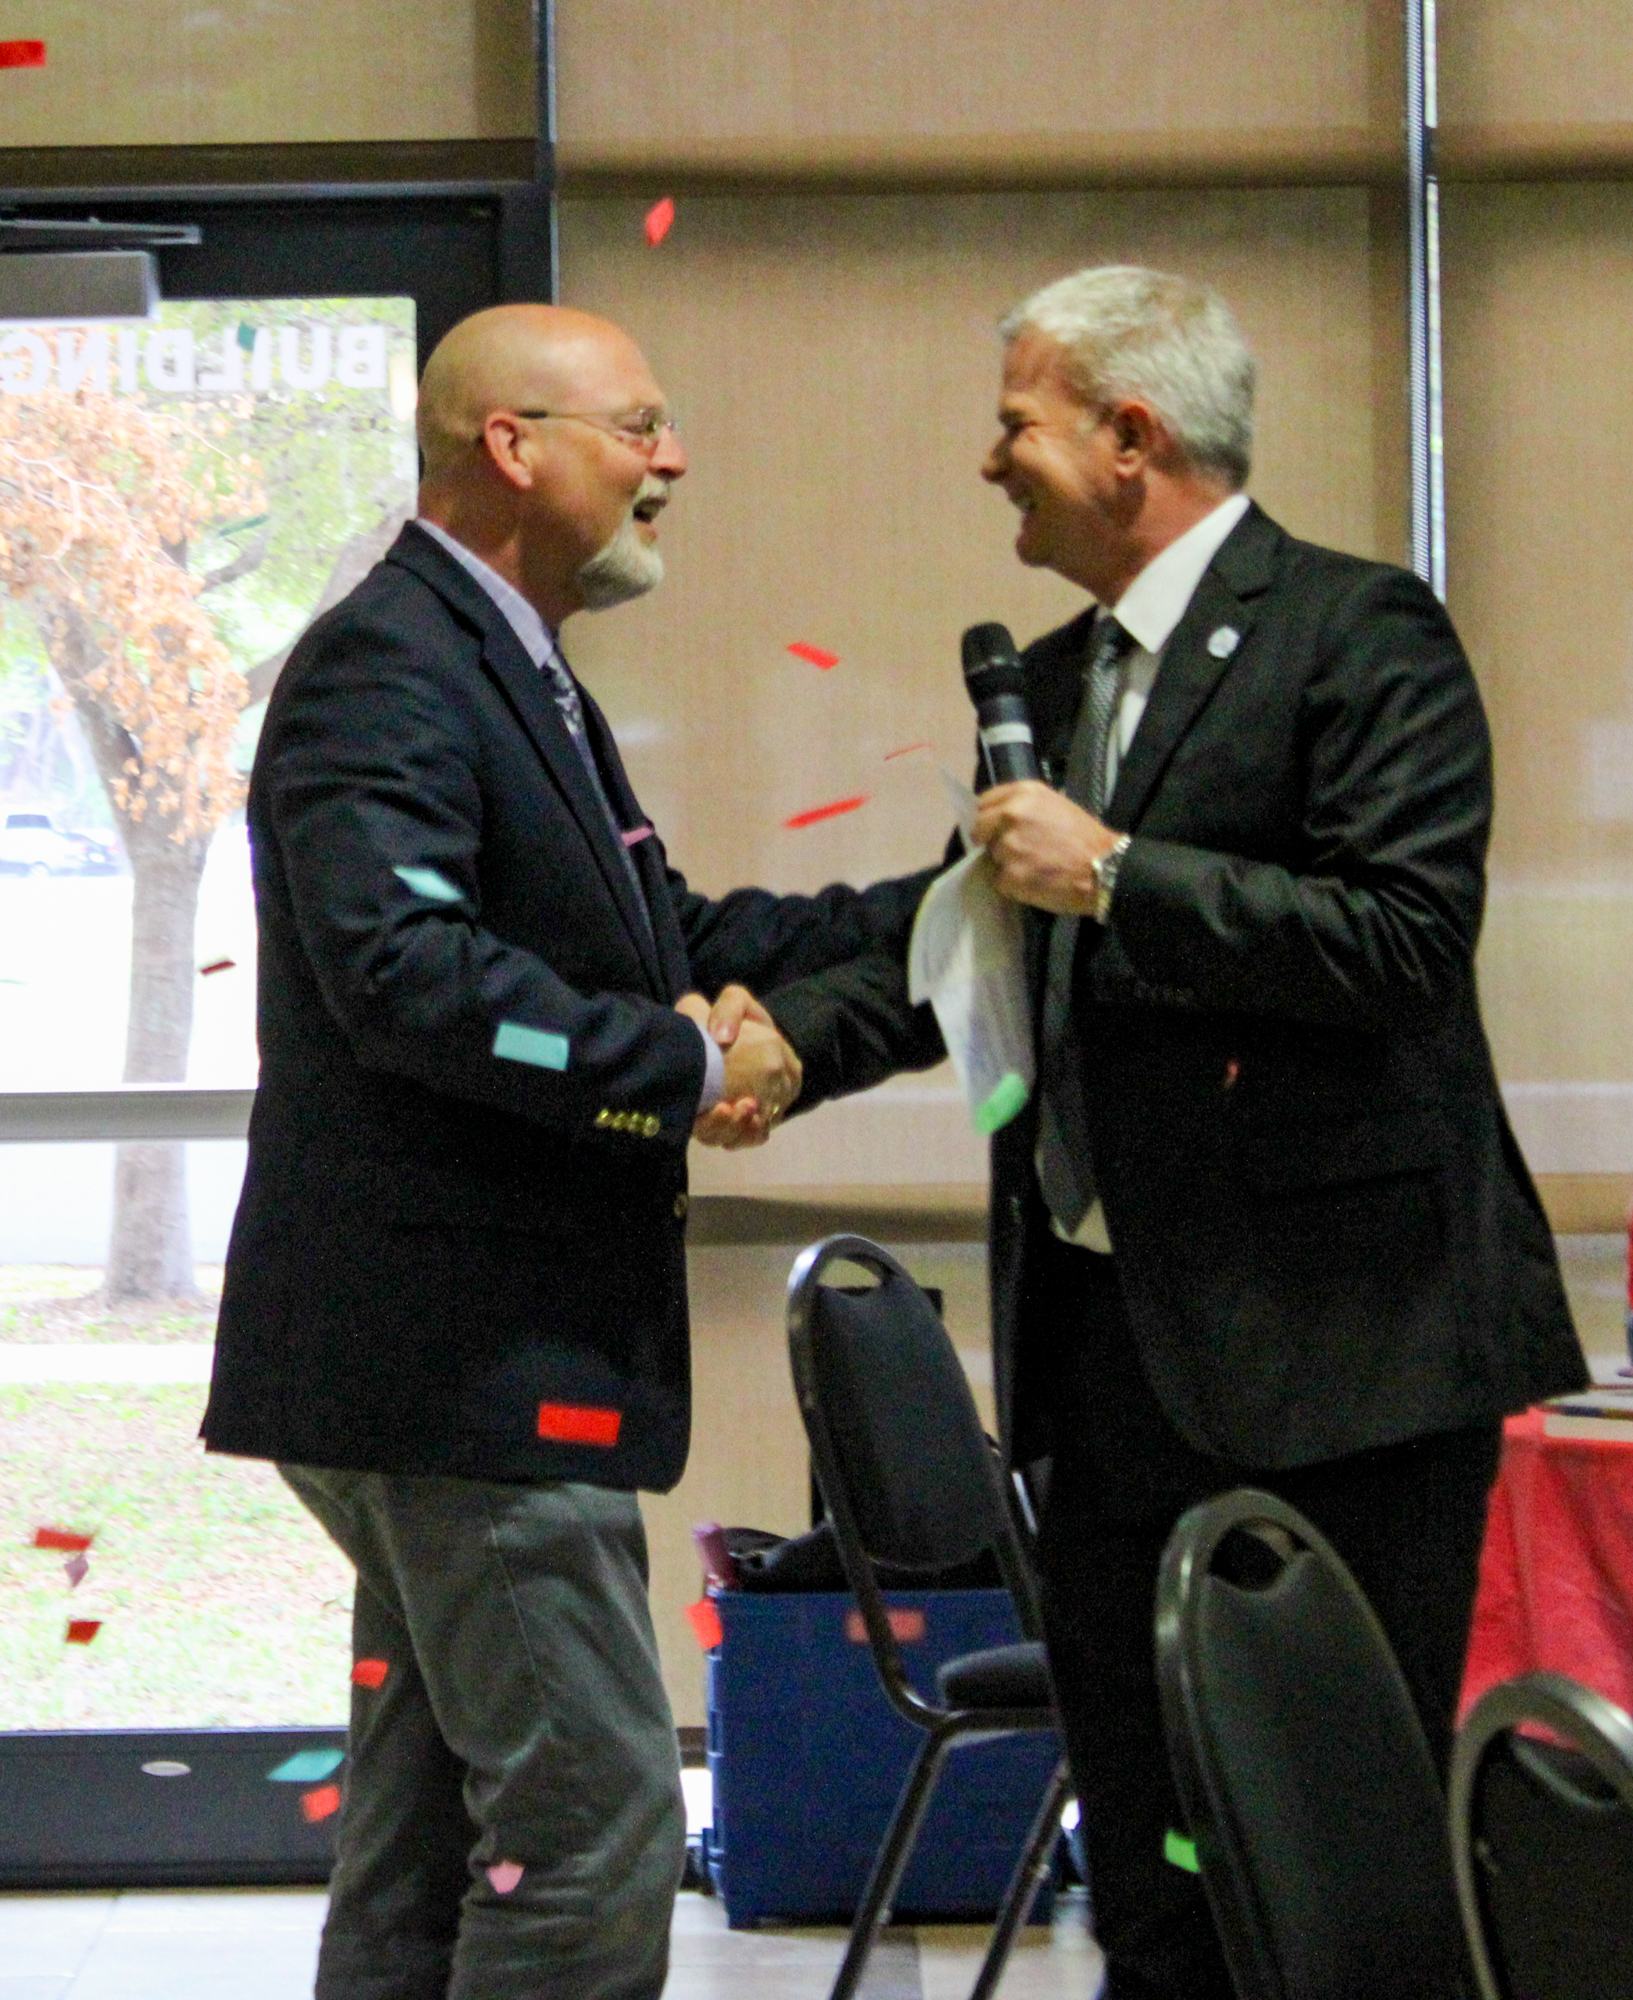 Stephen Covert shakes the hand of Sarasota County Schools Superintendent Brennan Asplen amid a flurry of confetti. (Courtesy image)